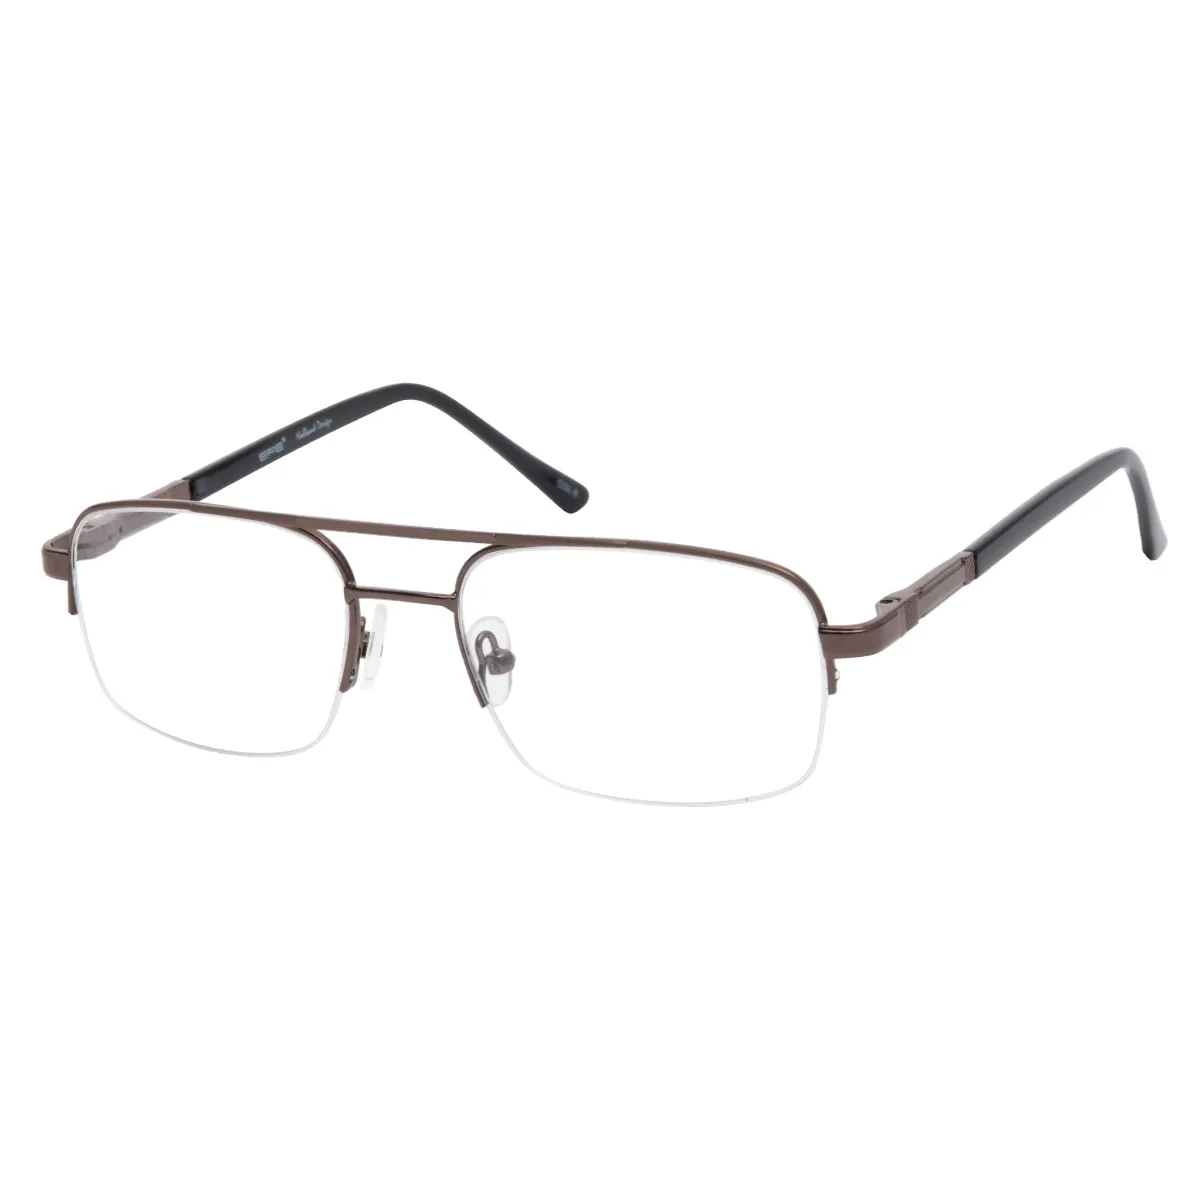 Derek - Half-Rim Brown Glasses for Men